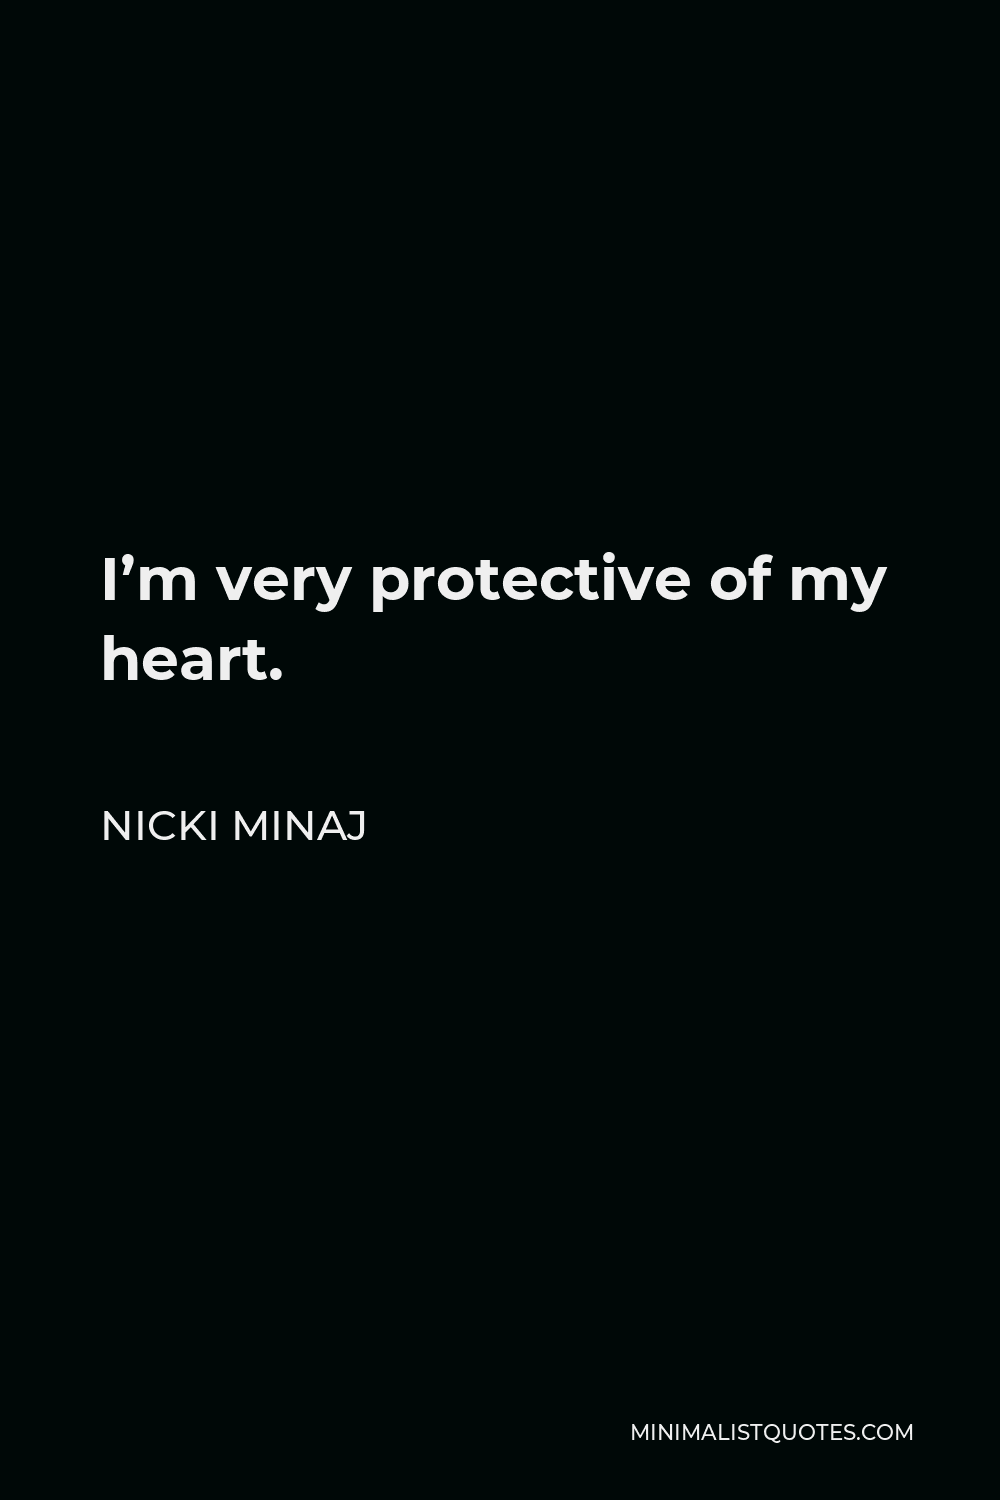 Nicki Minaj Quote: I'm very protective of my heart.